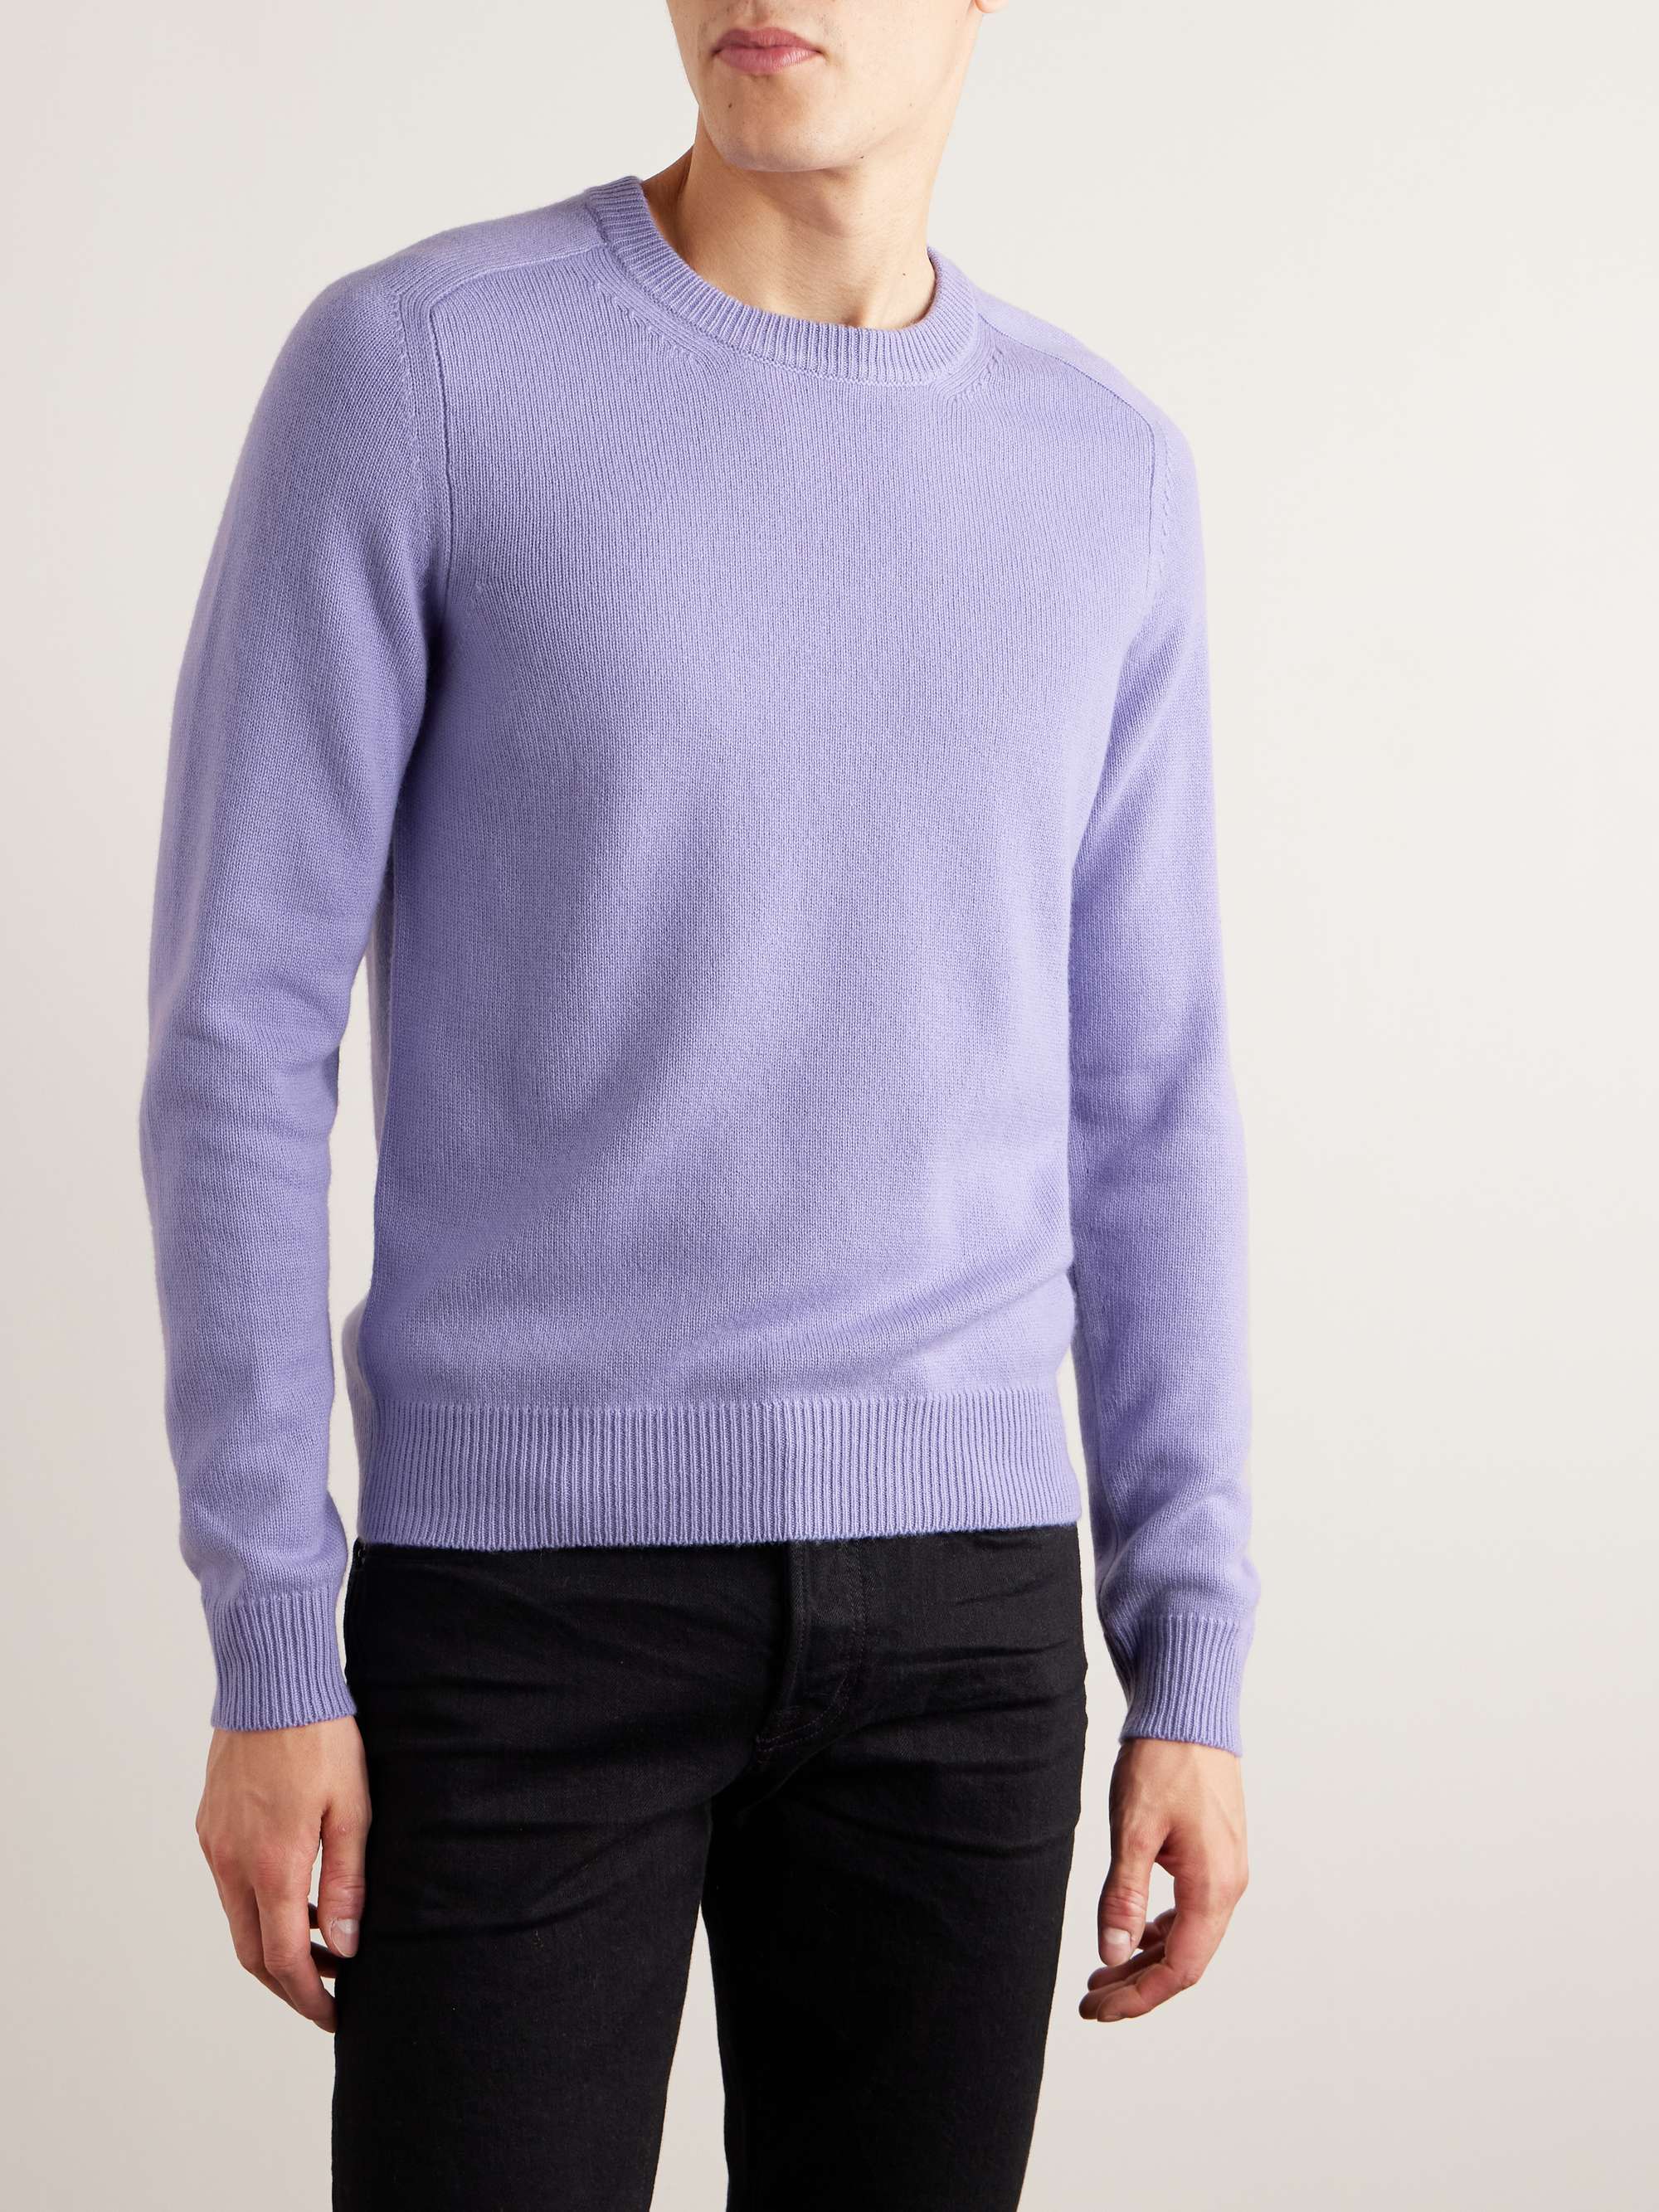 TOM FORD Cashmere Sweater for Men | MR PORTER